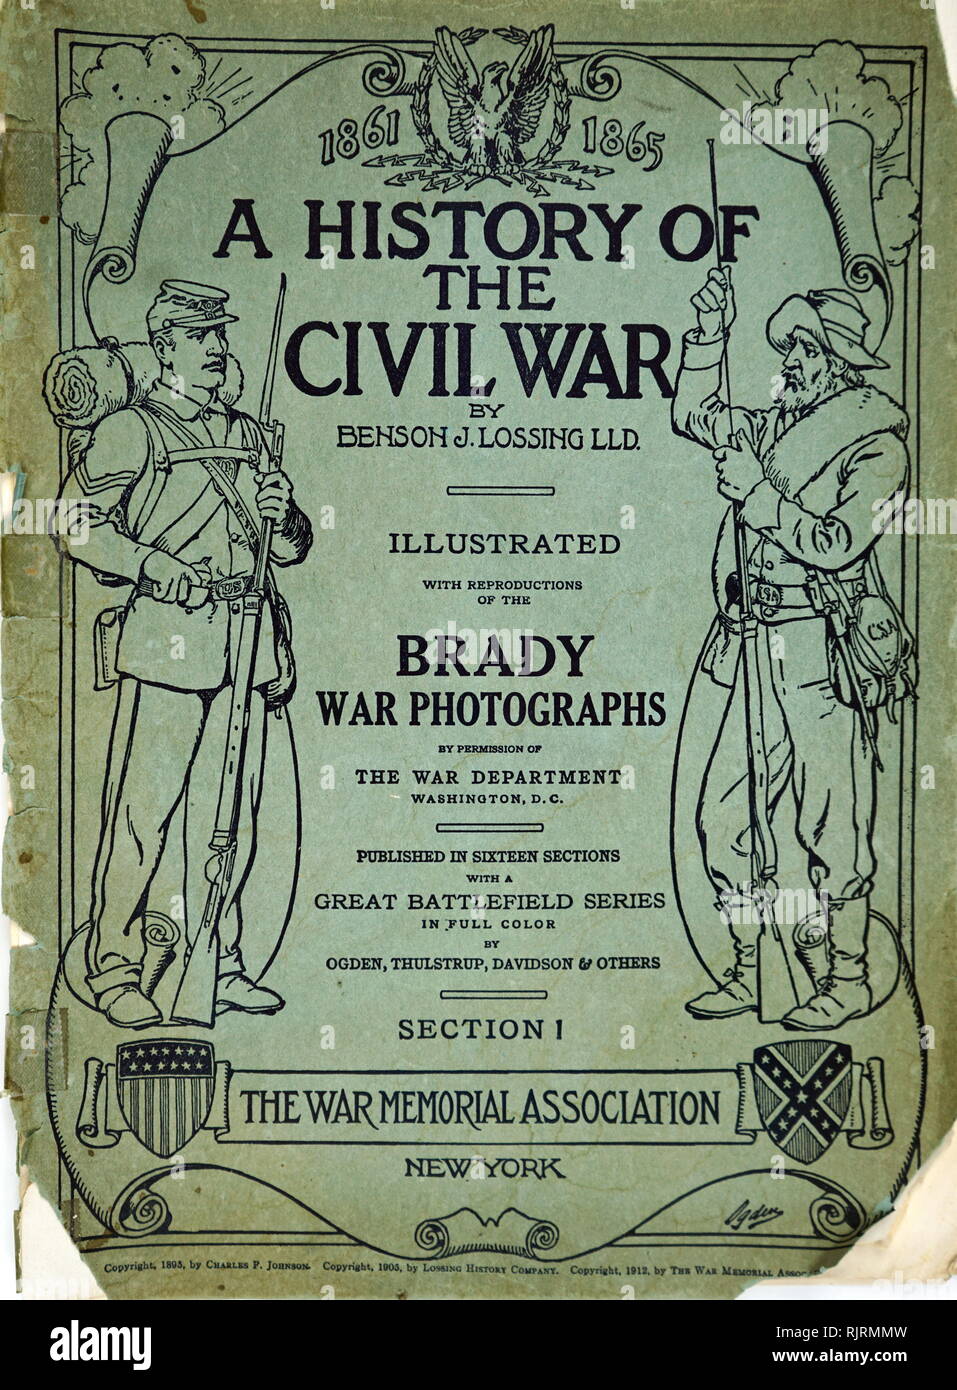 American Civil War commemorative album of Photographs by Matthew Brady. Published 1865 Stock Photo